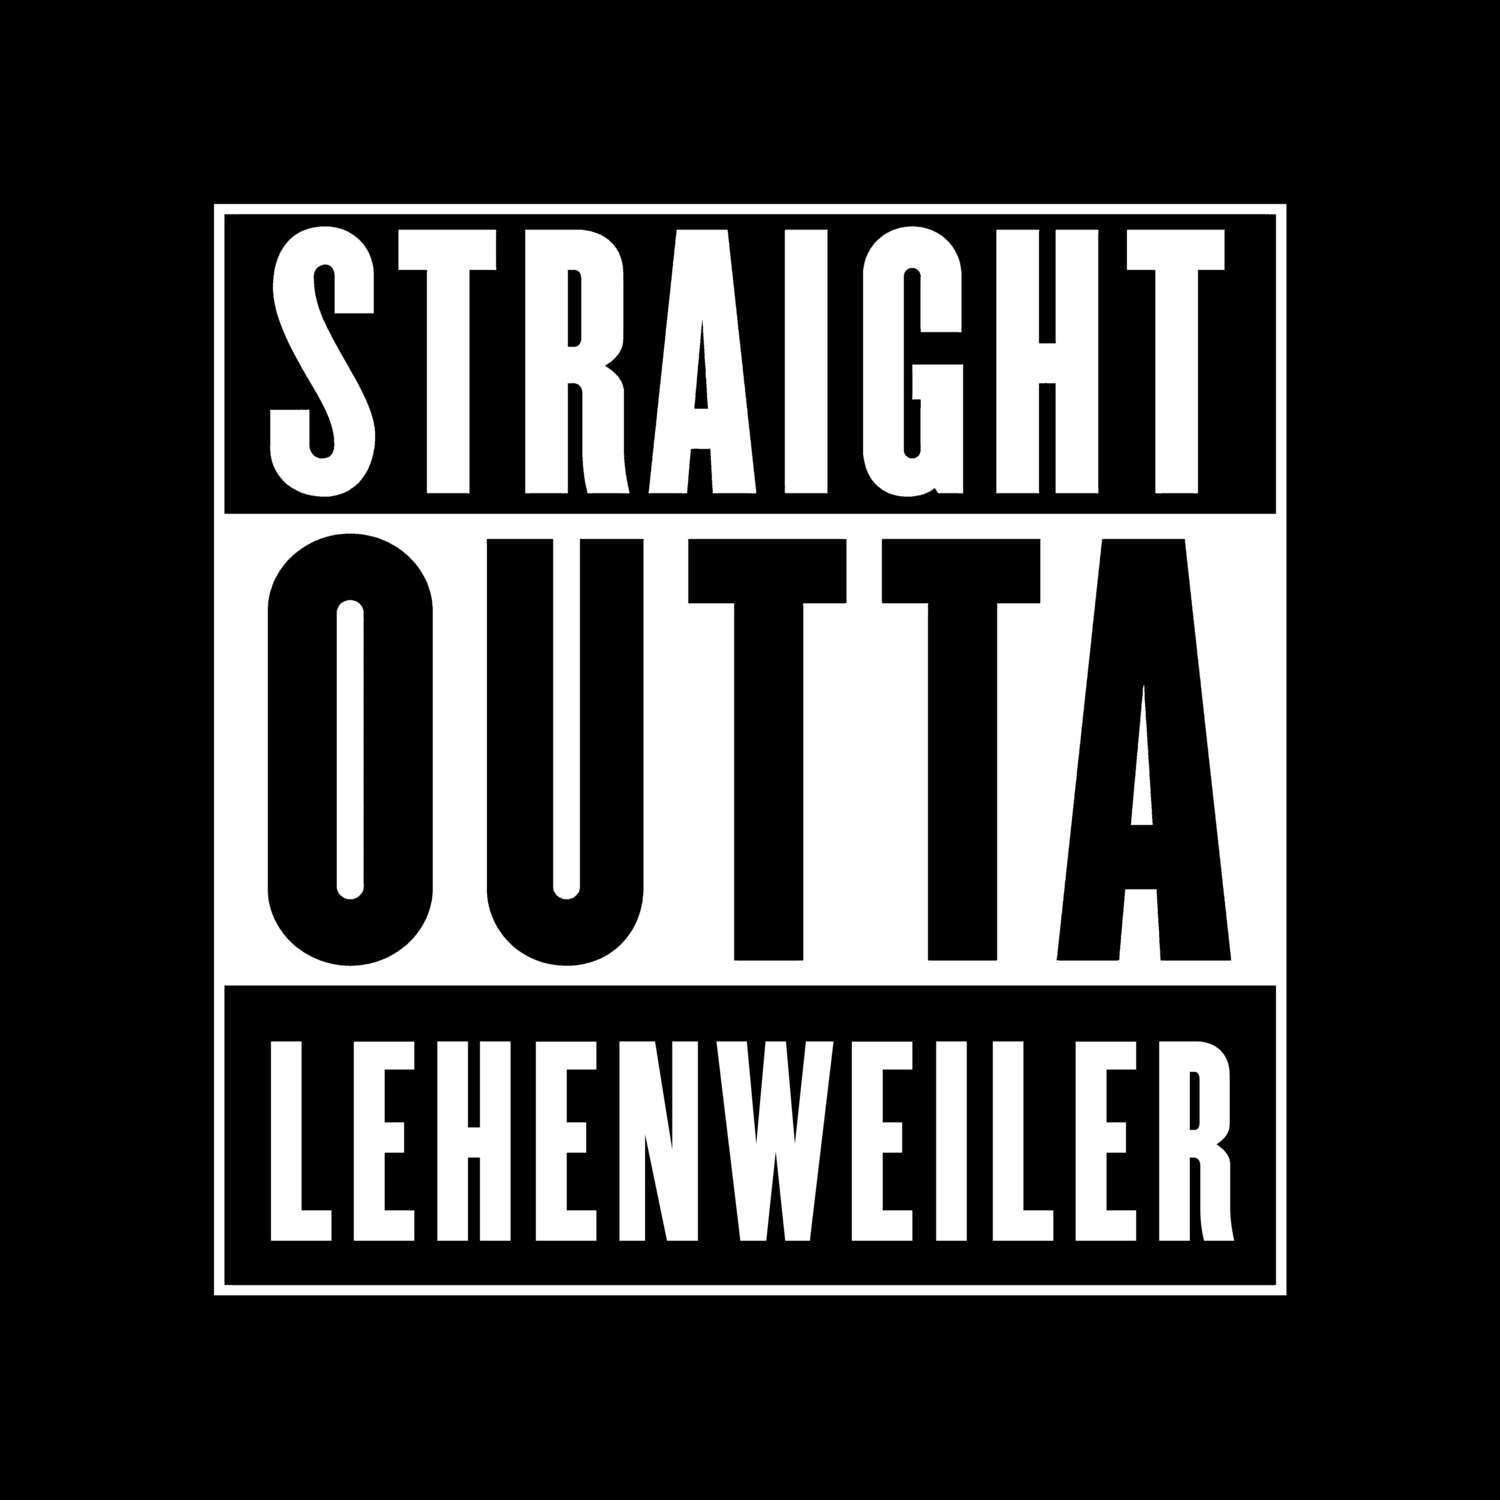 Lehenweiler T-Shirt »Straight Outta«